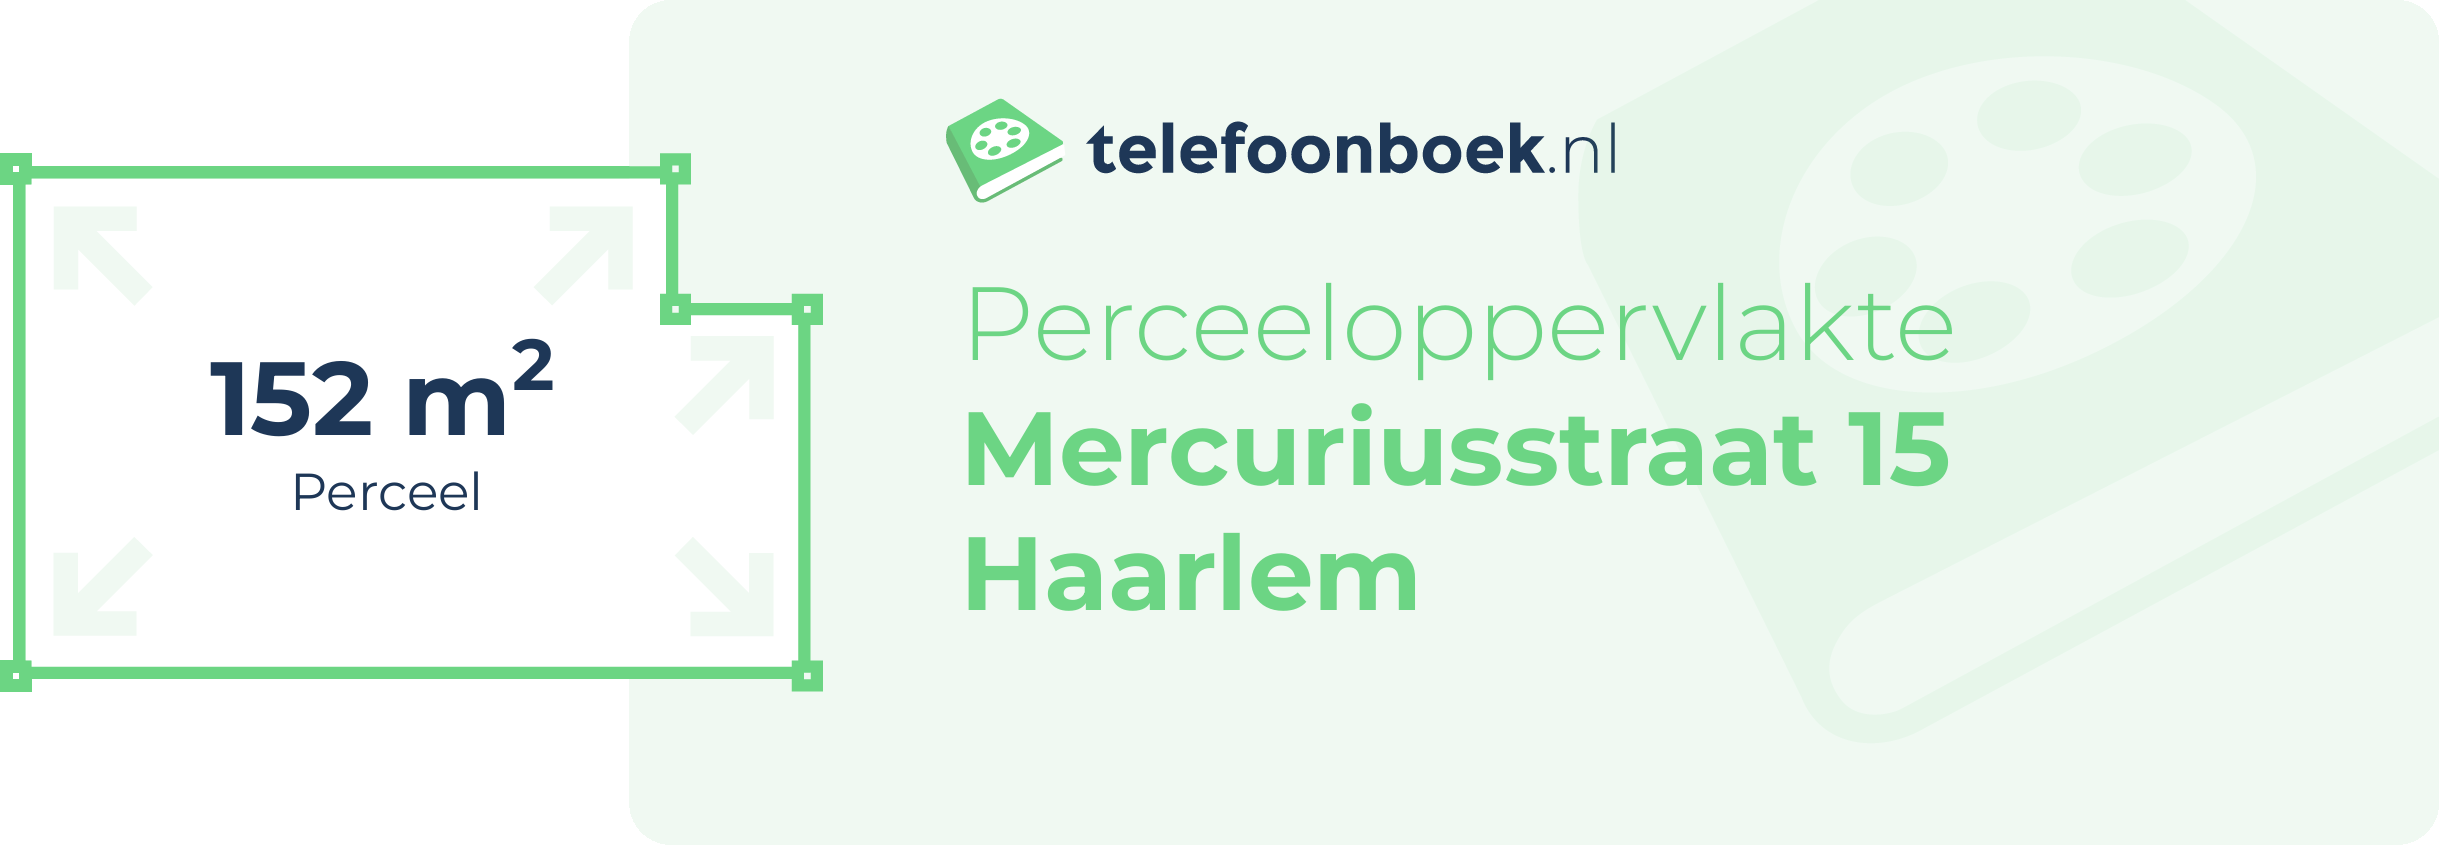 Perceeloppervlakte Mercuriusstraat 15 Haarlem